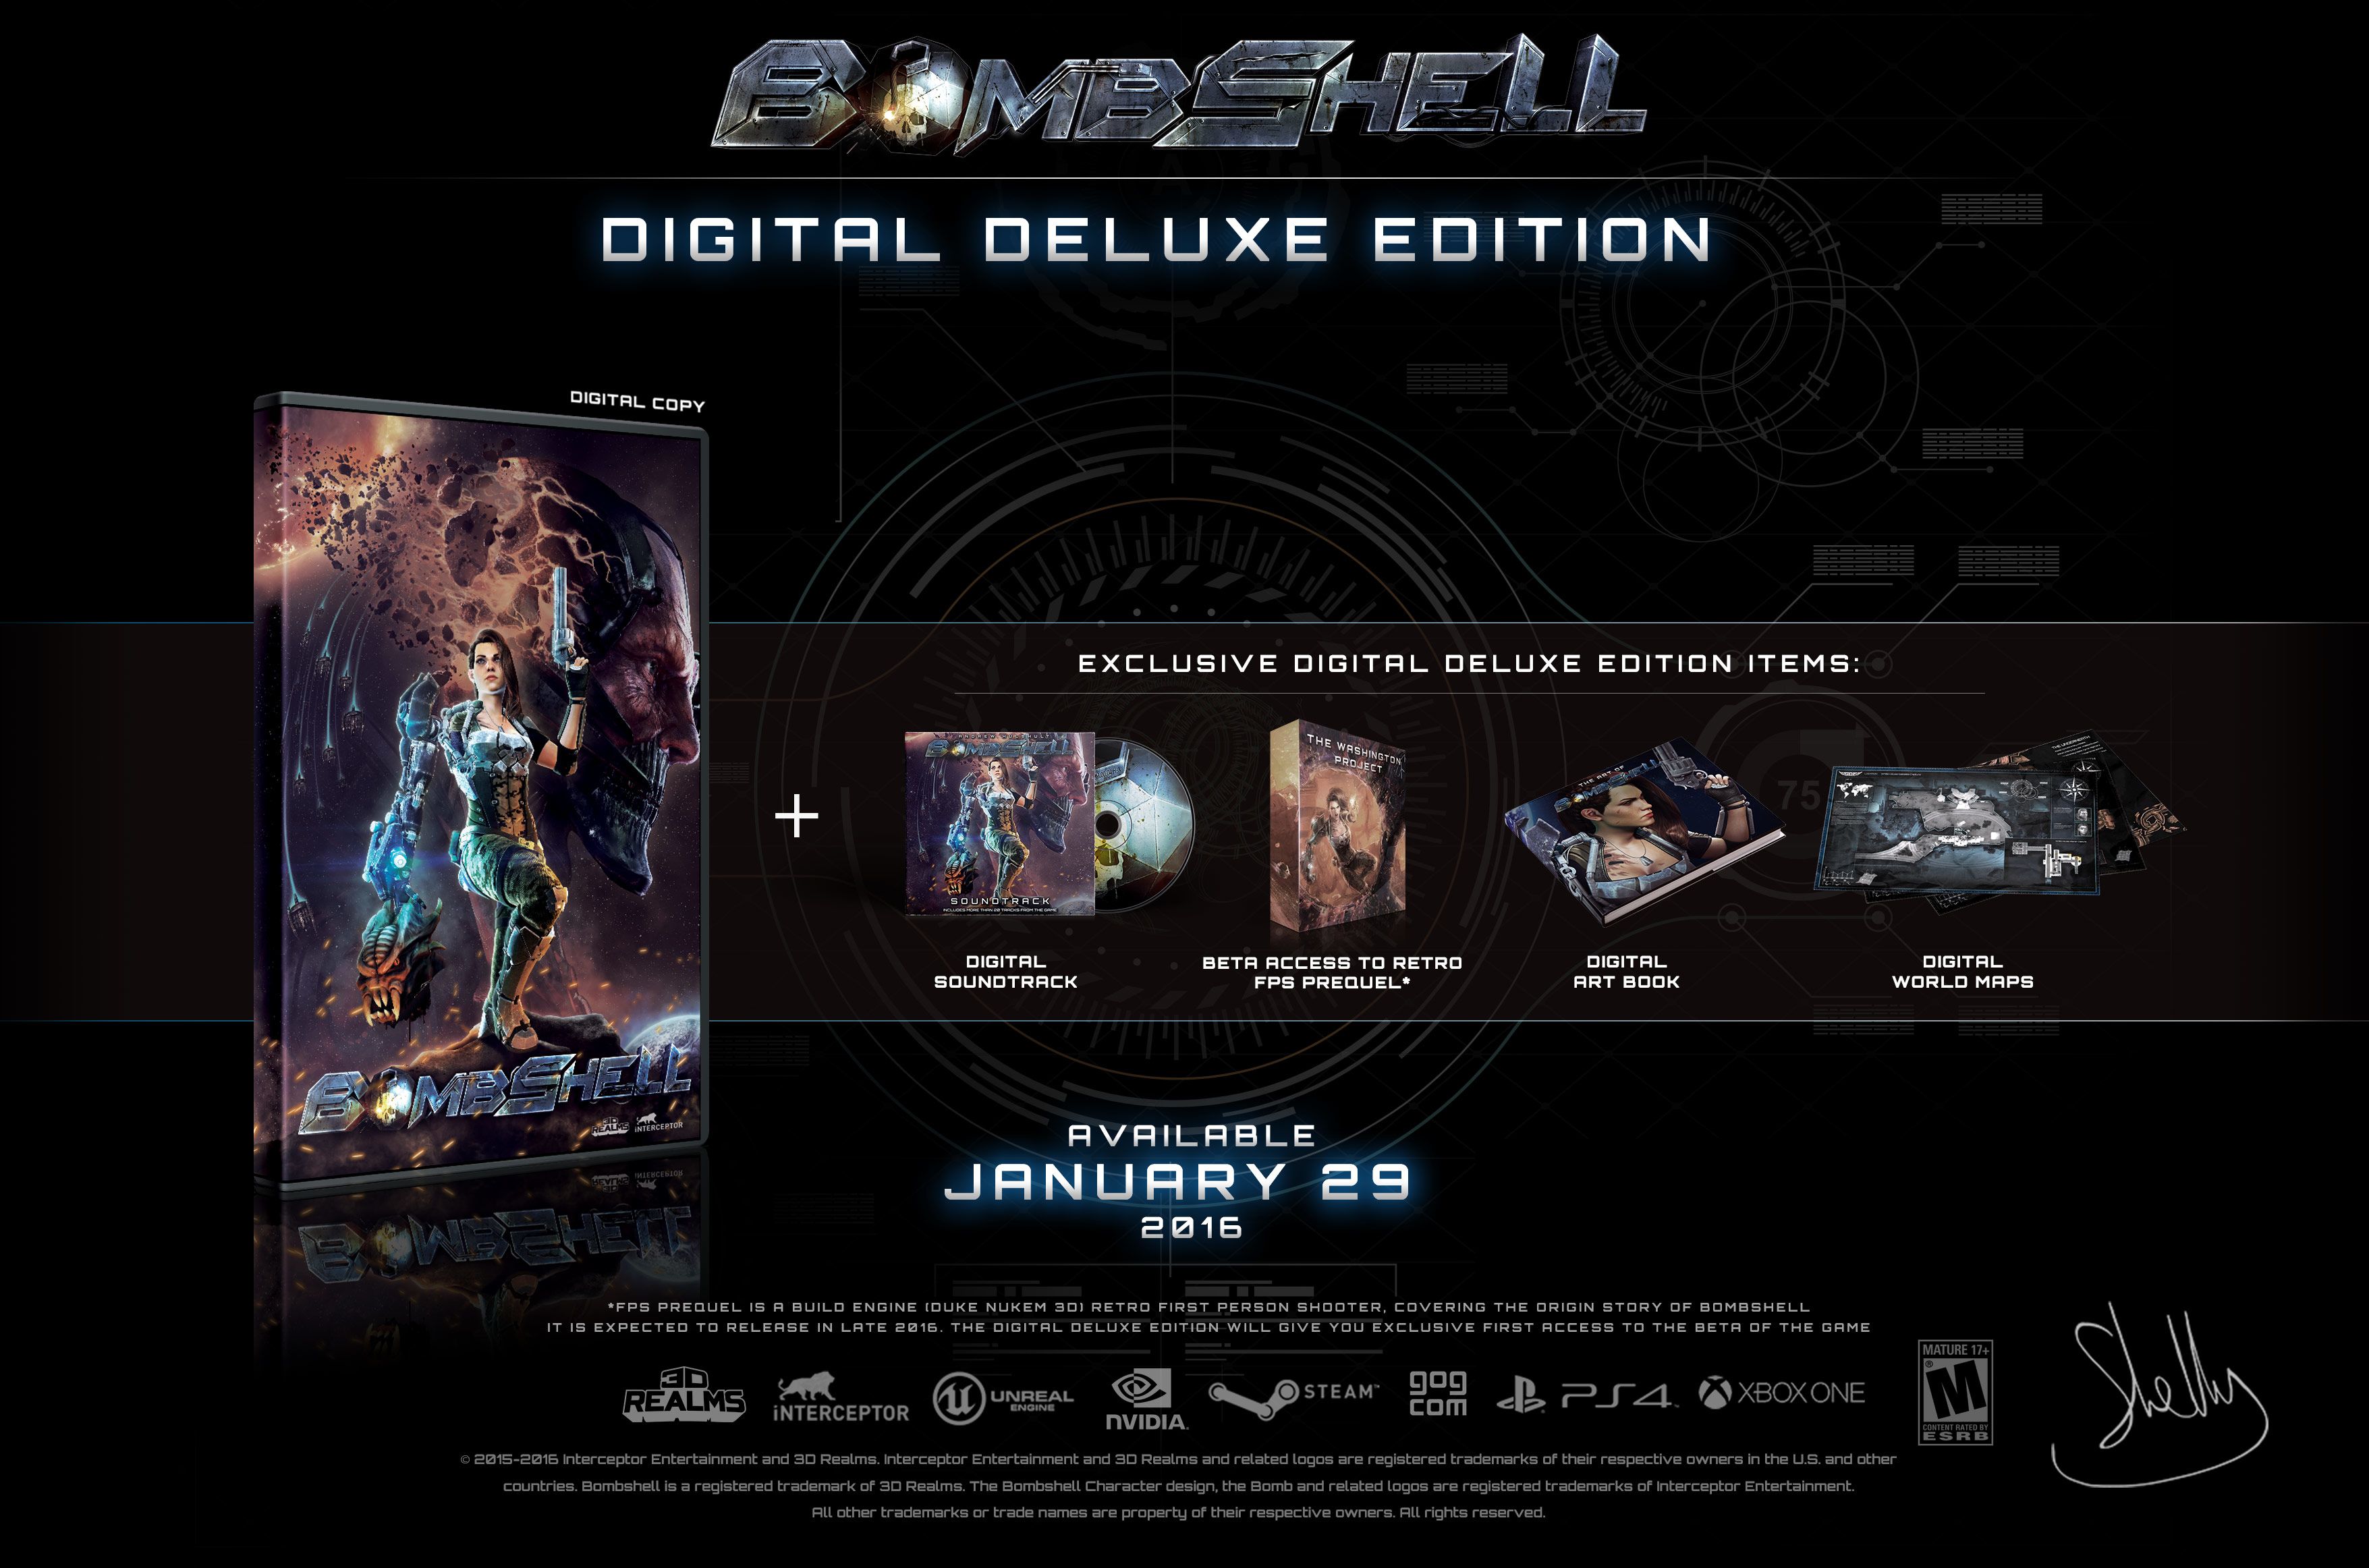 Bombshell Digital Deluxe Edition